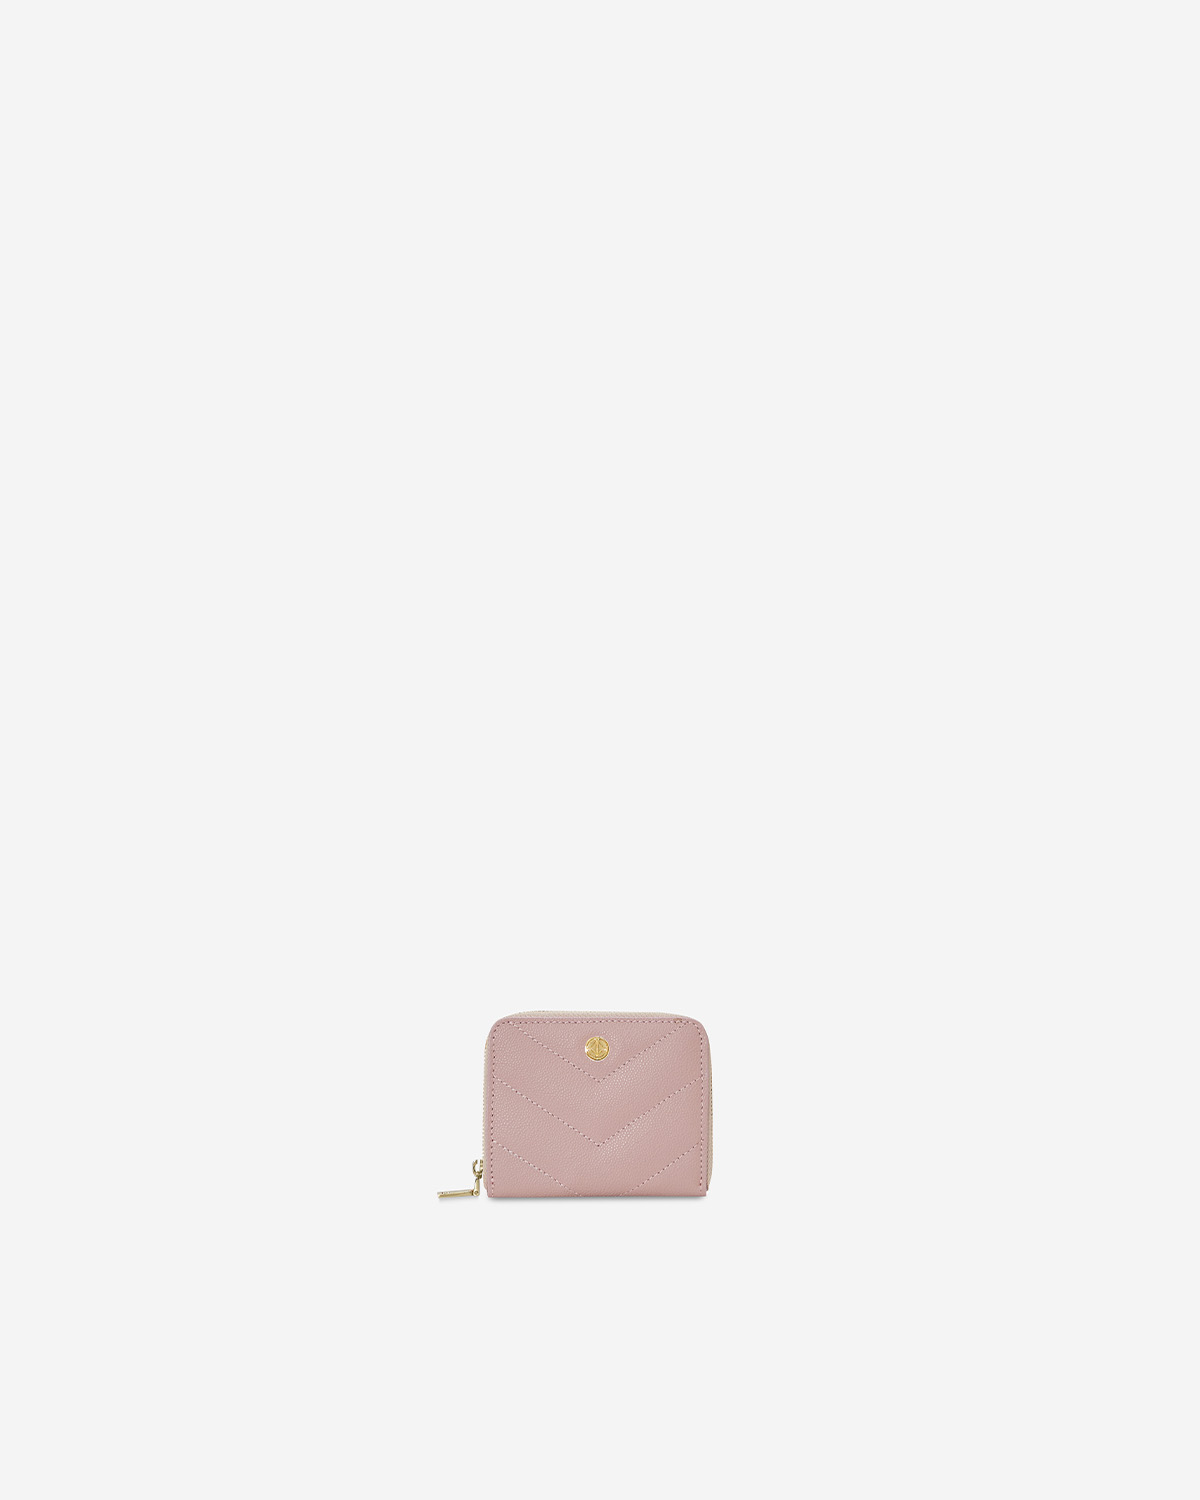 VERA CAVIAR Zipped Wallet in Rose Quartz กระเป๋าสตางค์ซิปรอบ อยู่ทรงสวย ทำจากหนังแท้ลาย Caviar สี Rose Quartz